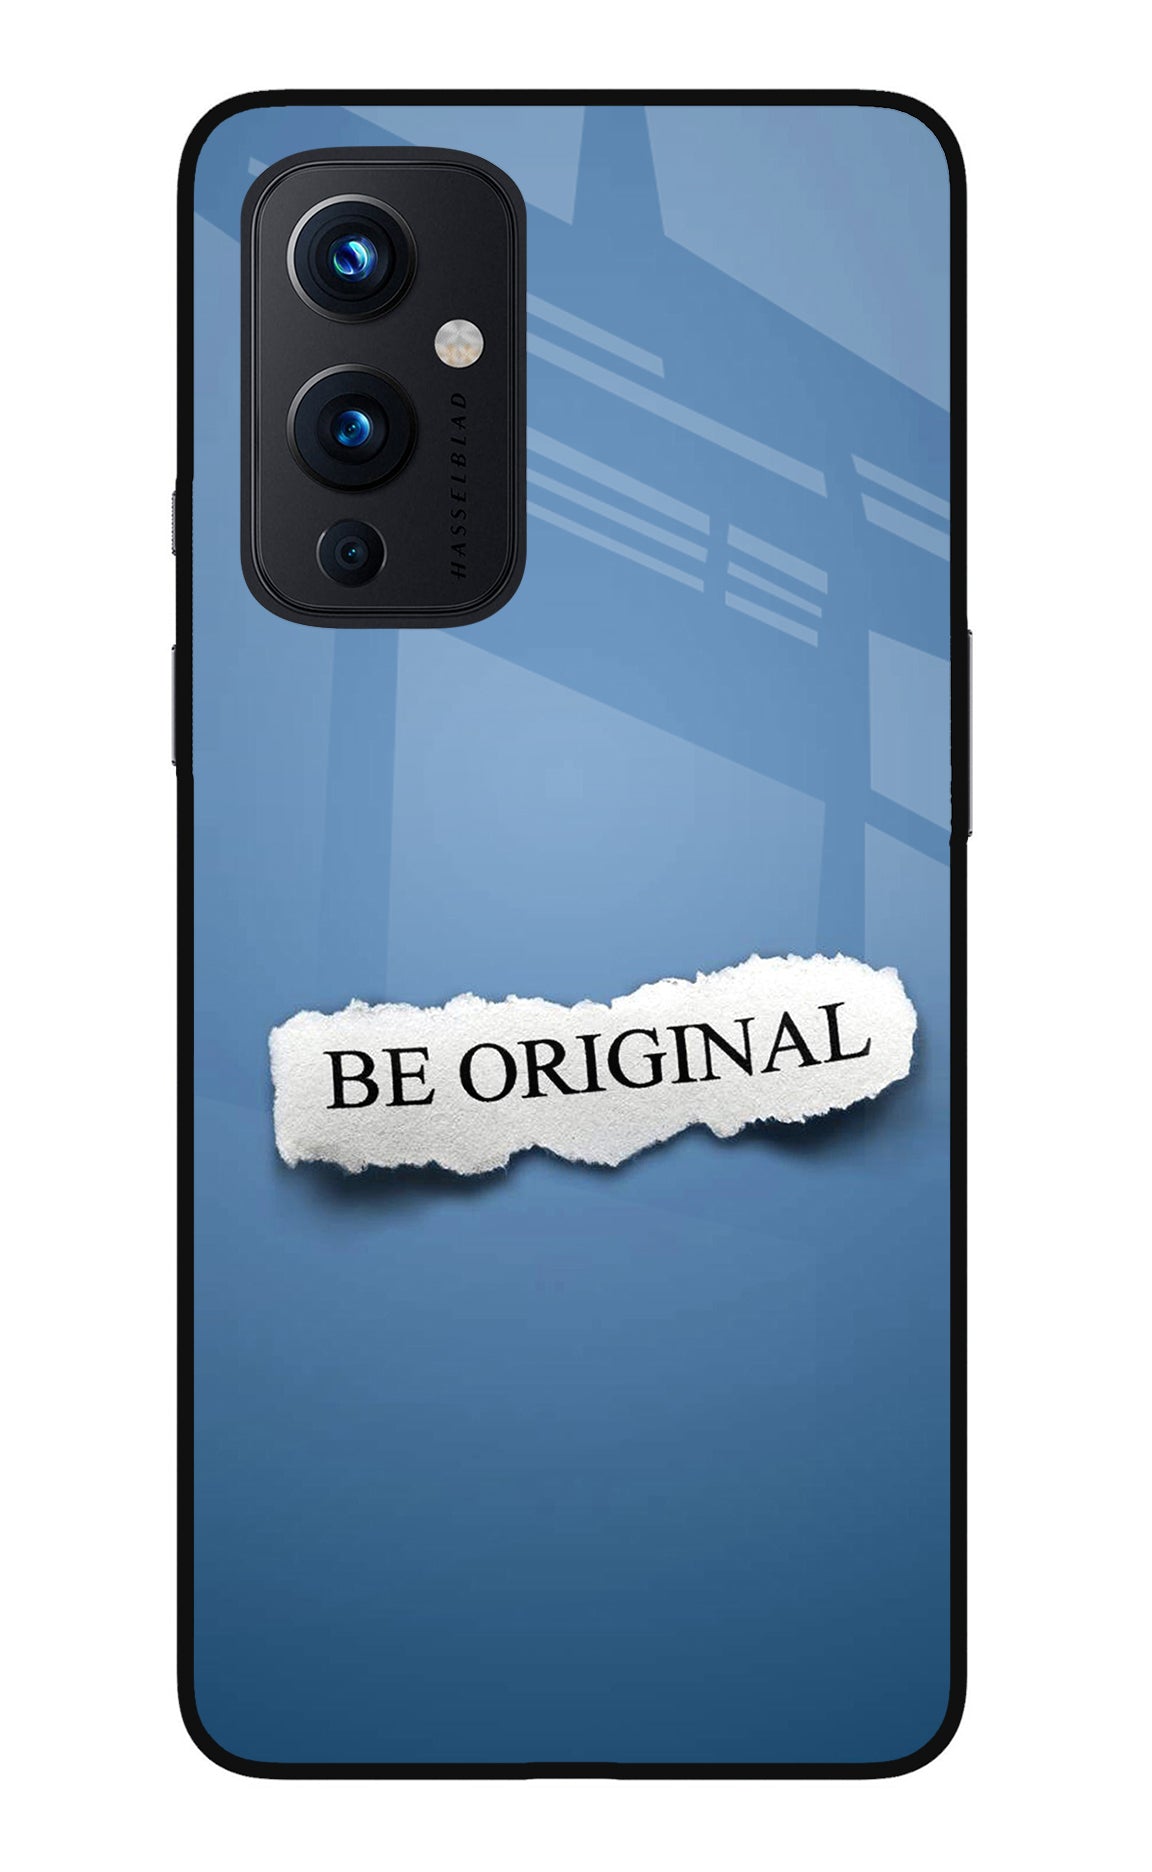 Be Original Oneplus 9 Back Cover